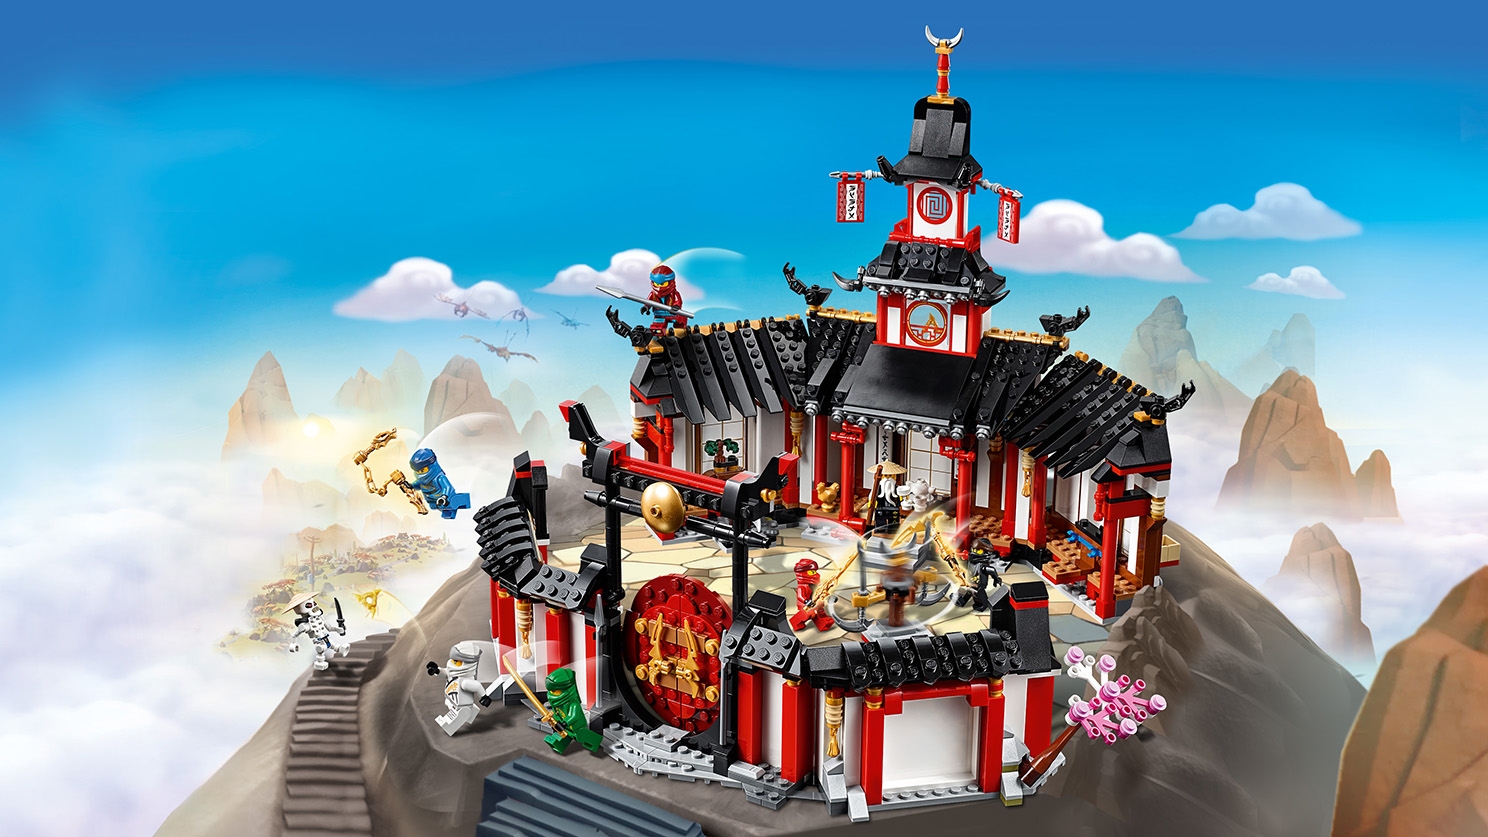 Om skrue vest Monastery of Spinjitzu 70670 - LEGO® NINJAGO® Sets - LEGO.com for kids